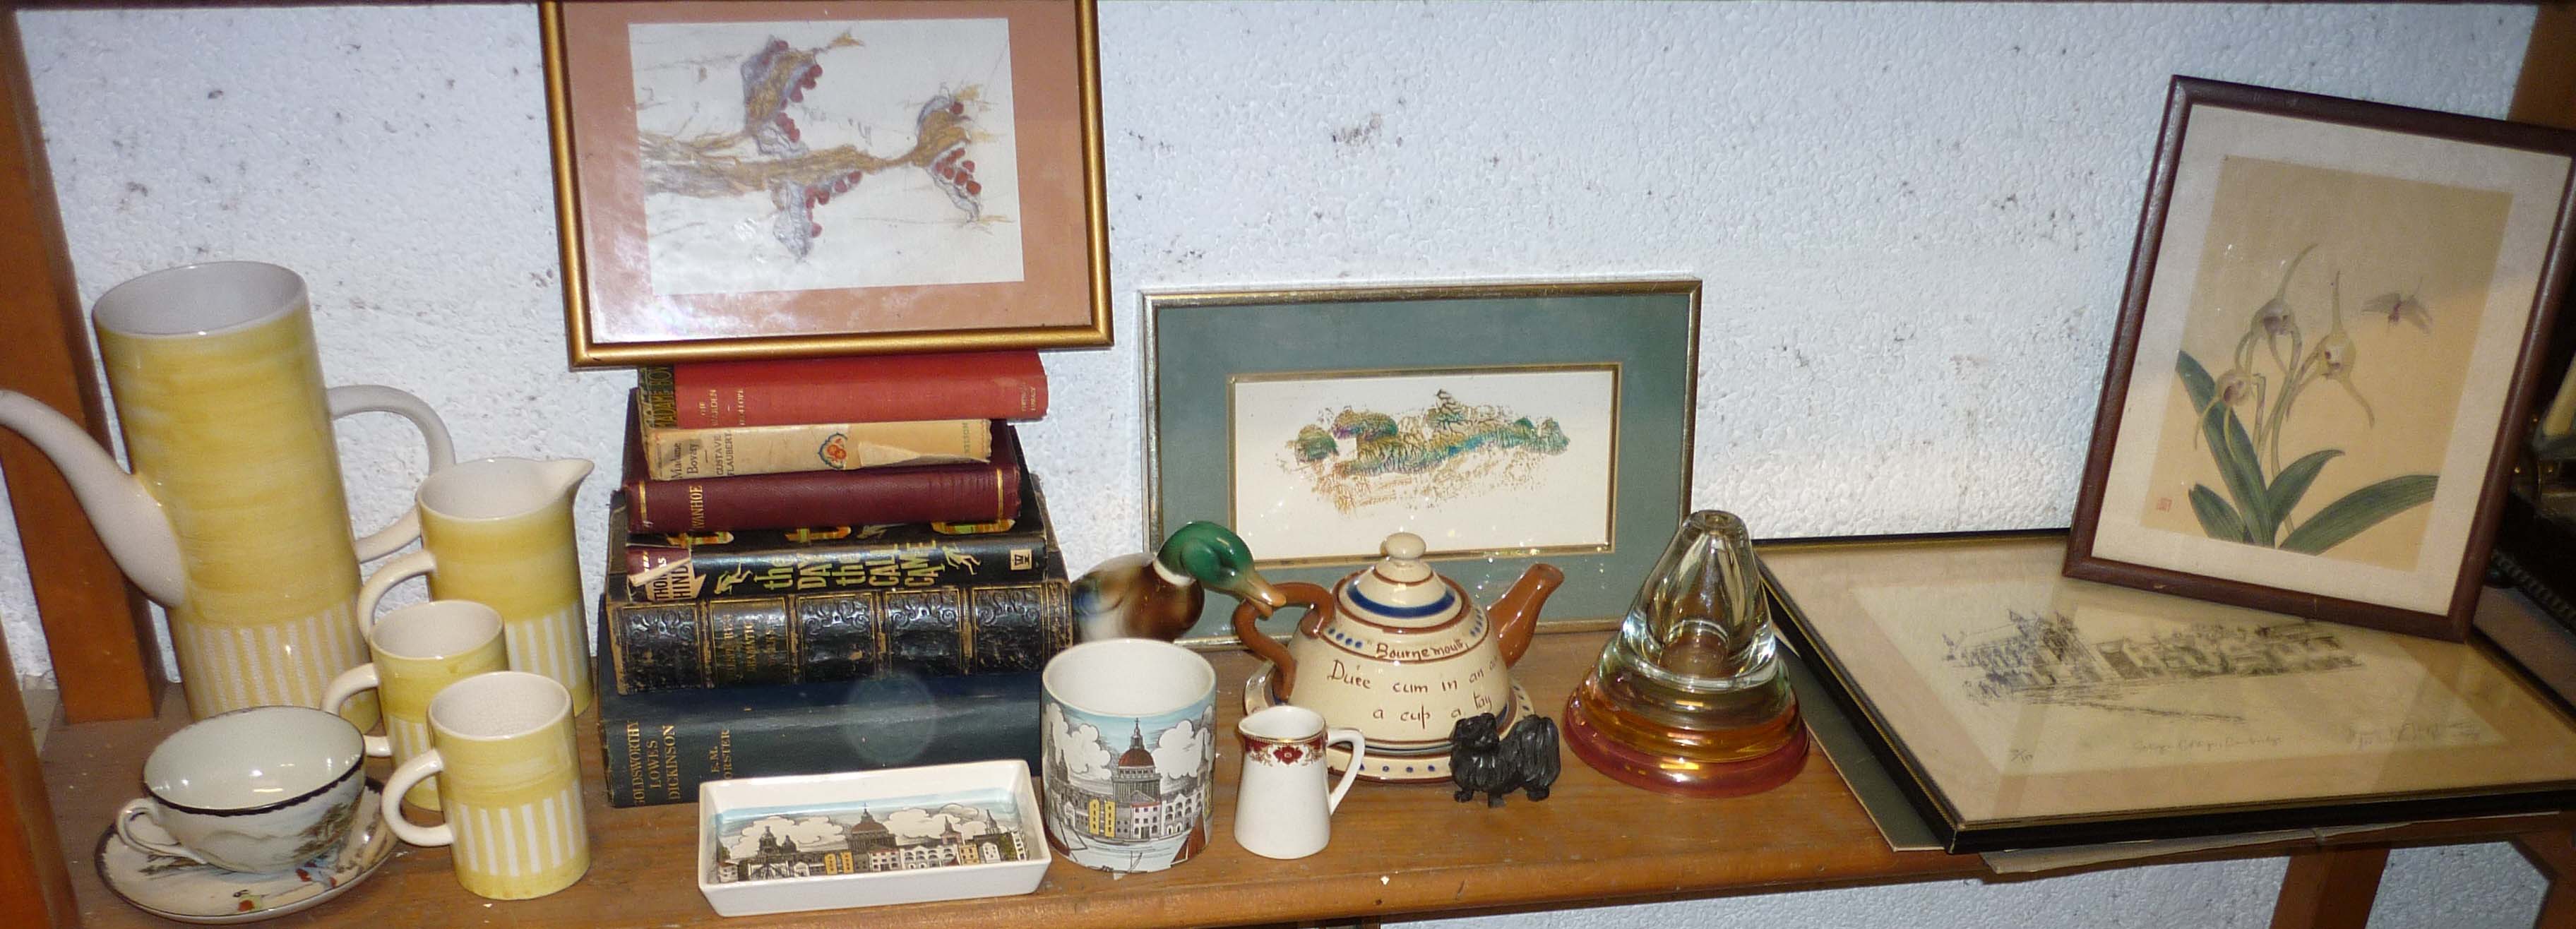 Devonware teapot and stand, books, glassware, pictures etc